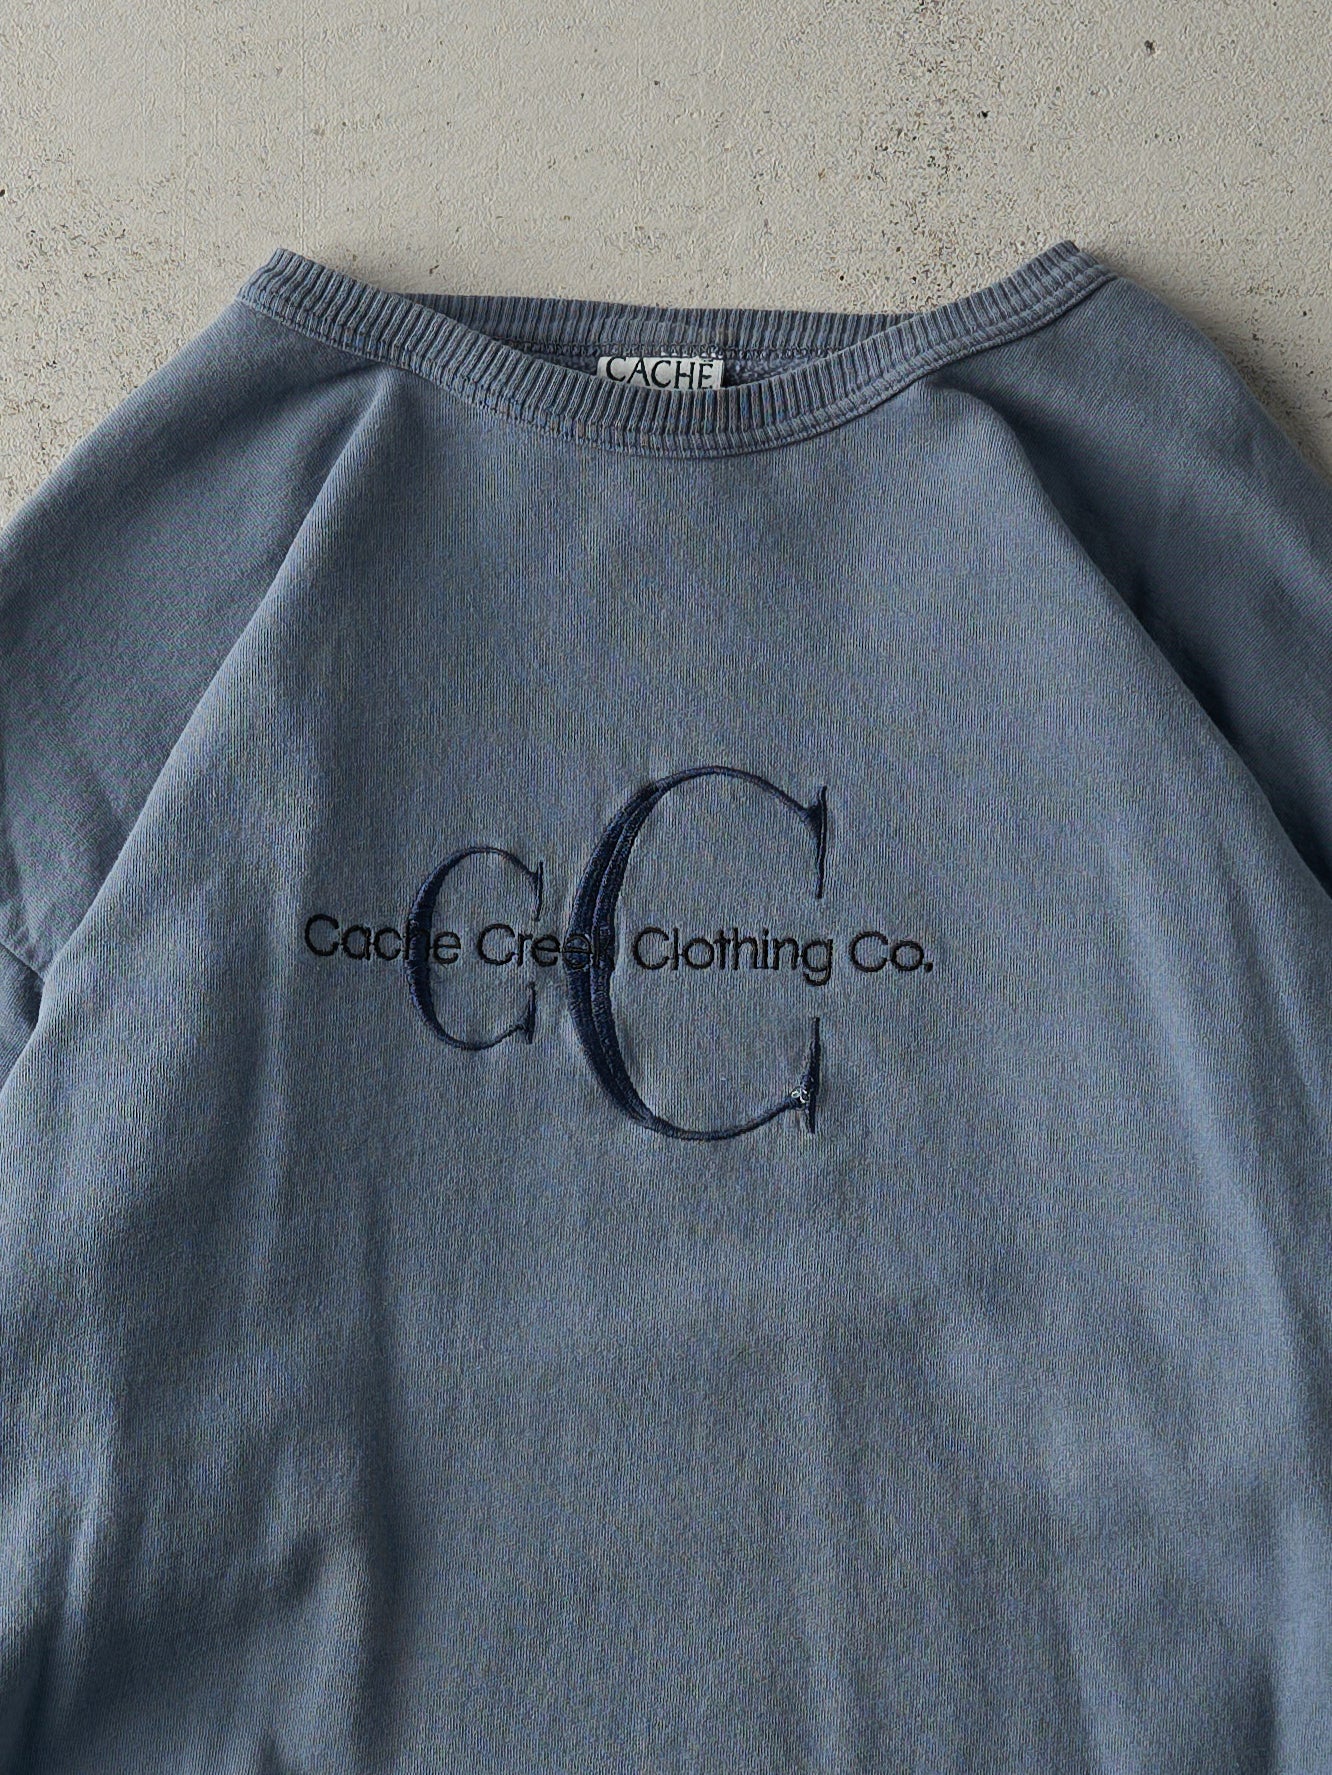 Vintage 90s Slate Blue Embroidered Cache Creek Clothing Co Crewneck (L)